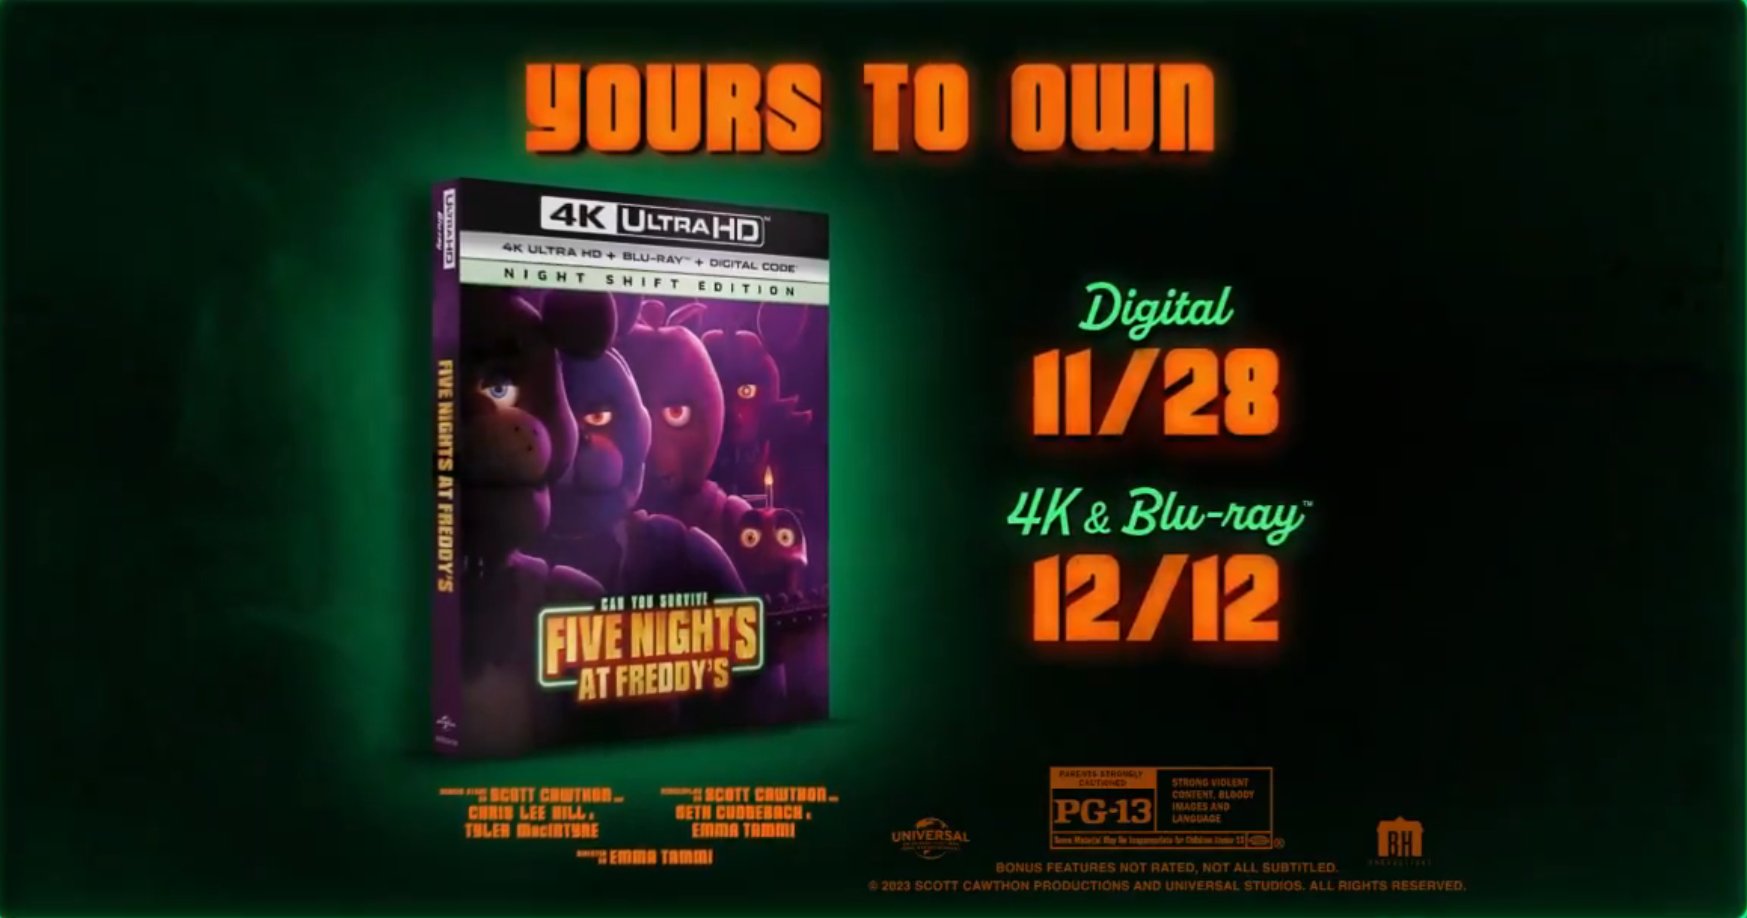 Five Nights at Freddy's (Blu-ray + DVD + Digital)